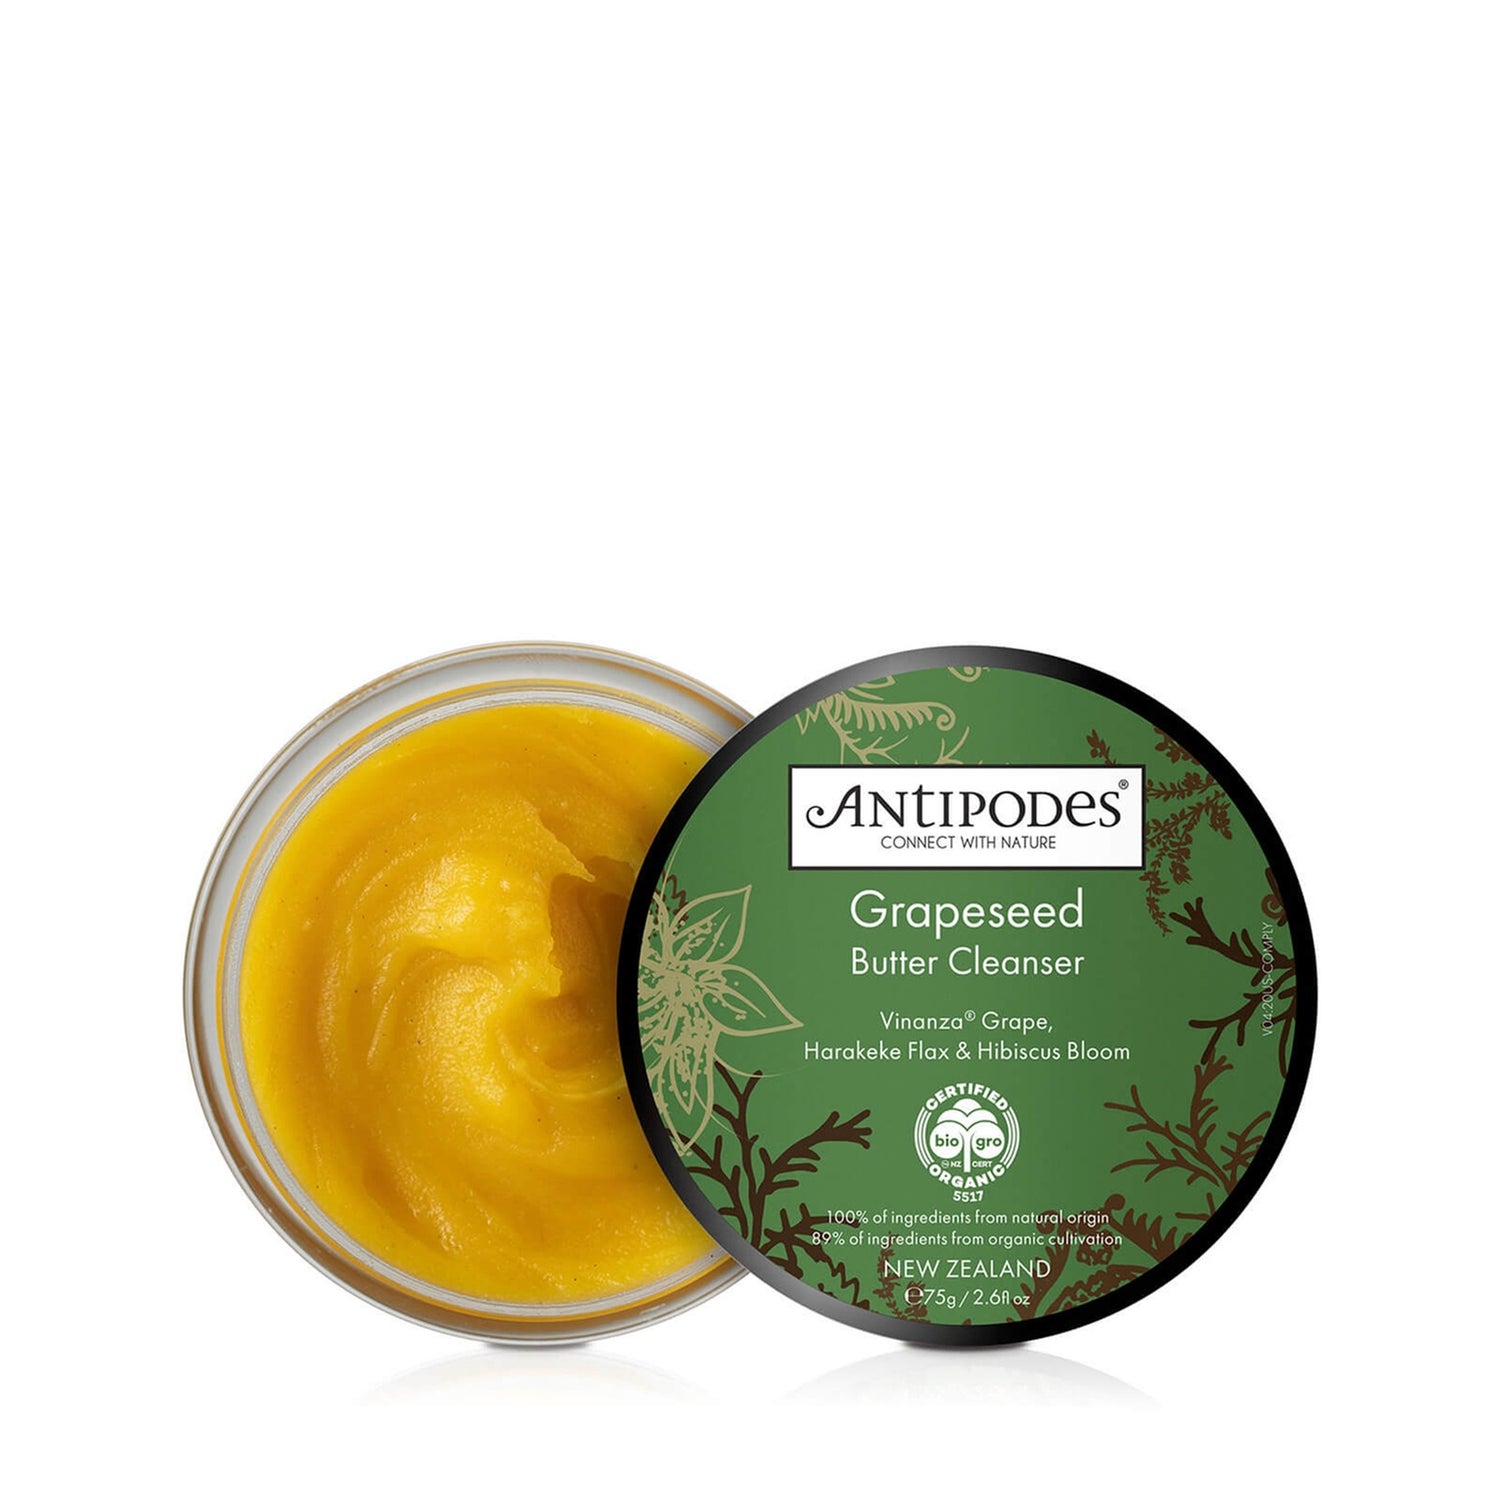 Manteiga de Limpeza Facial com Extrato de Grainha de Uva da Antipodes (75 g)